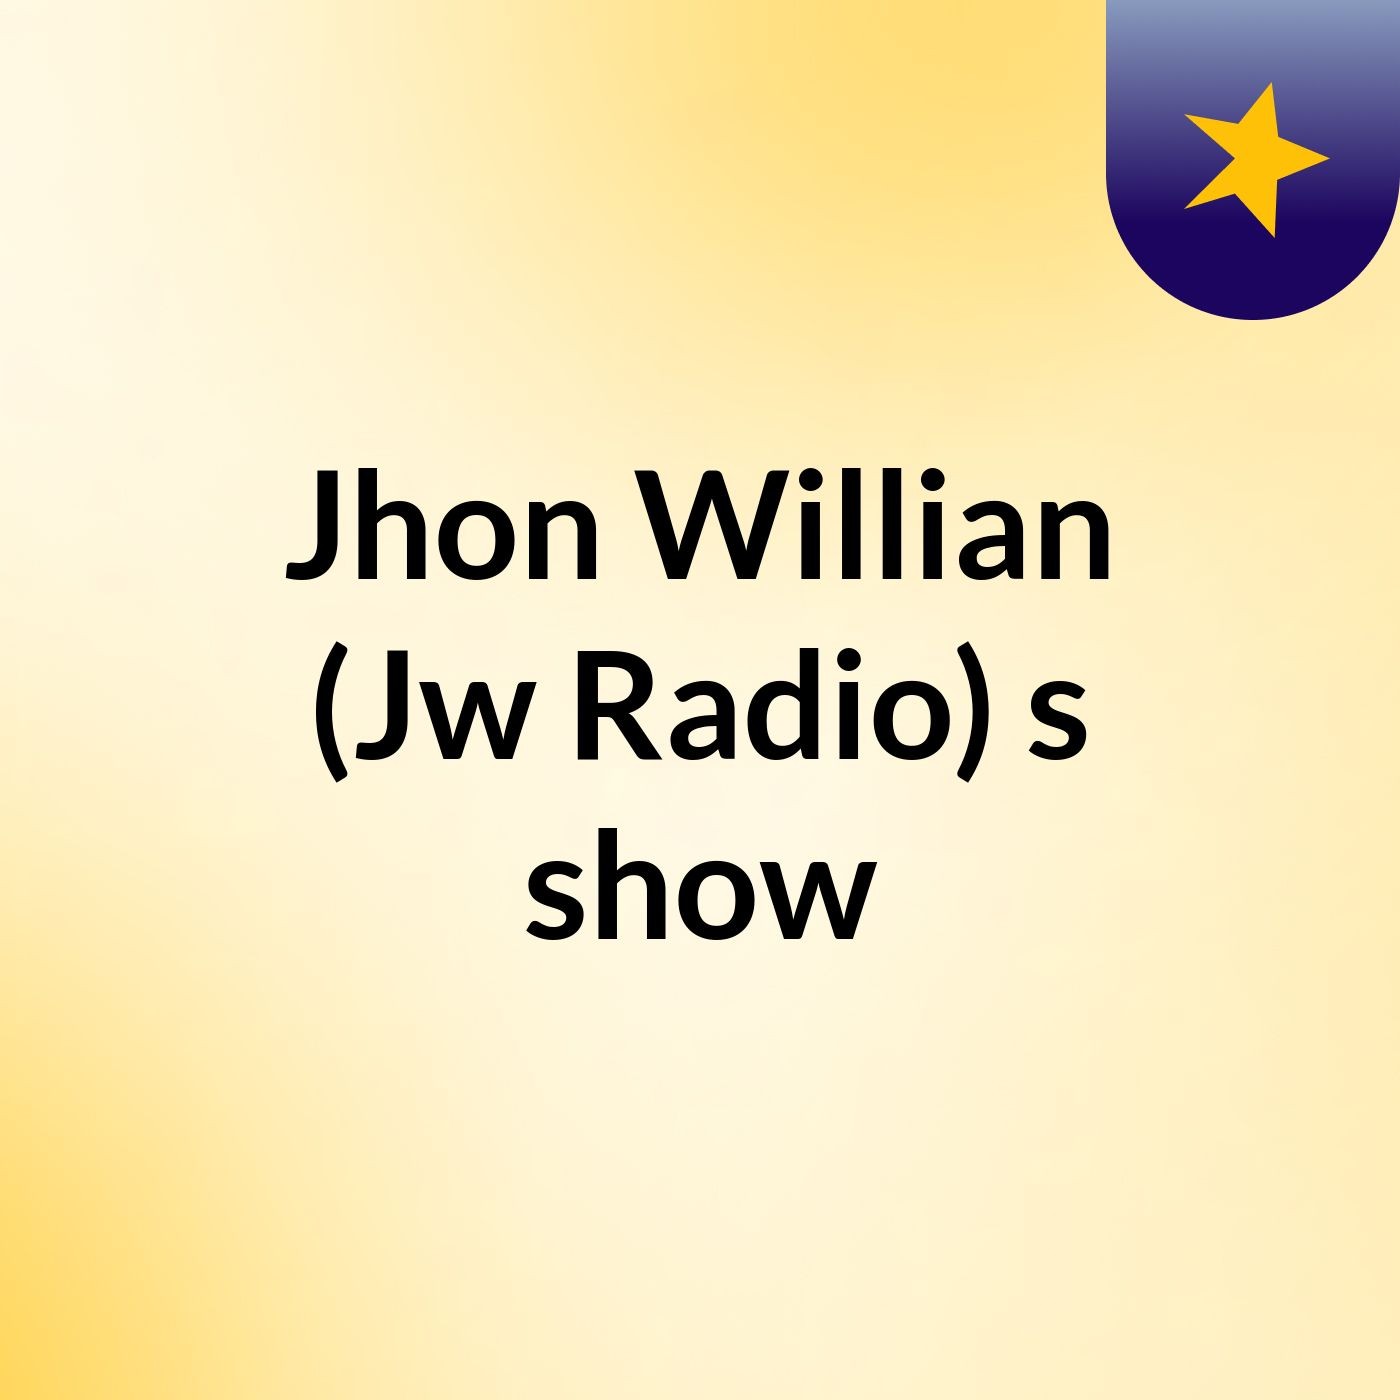 Jhon Willian (Jw Radio)'s show